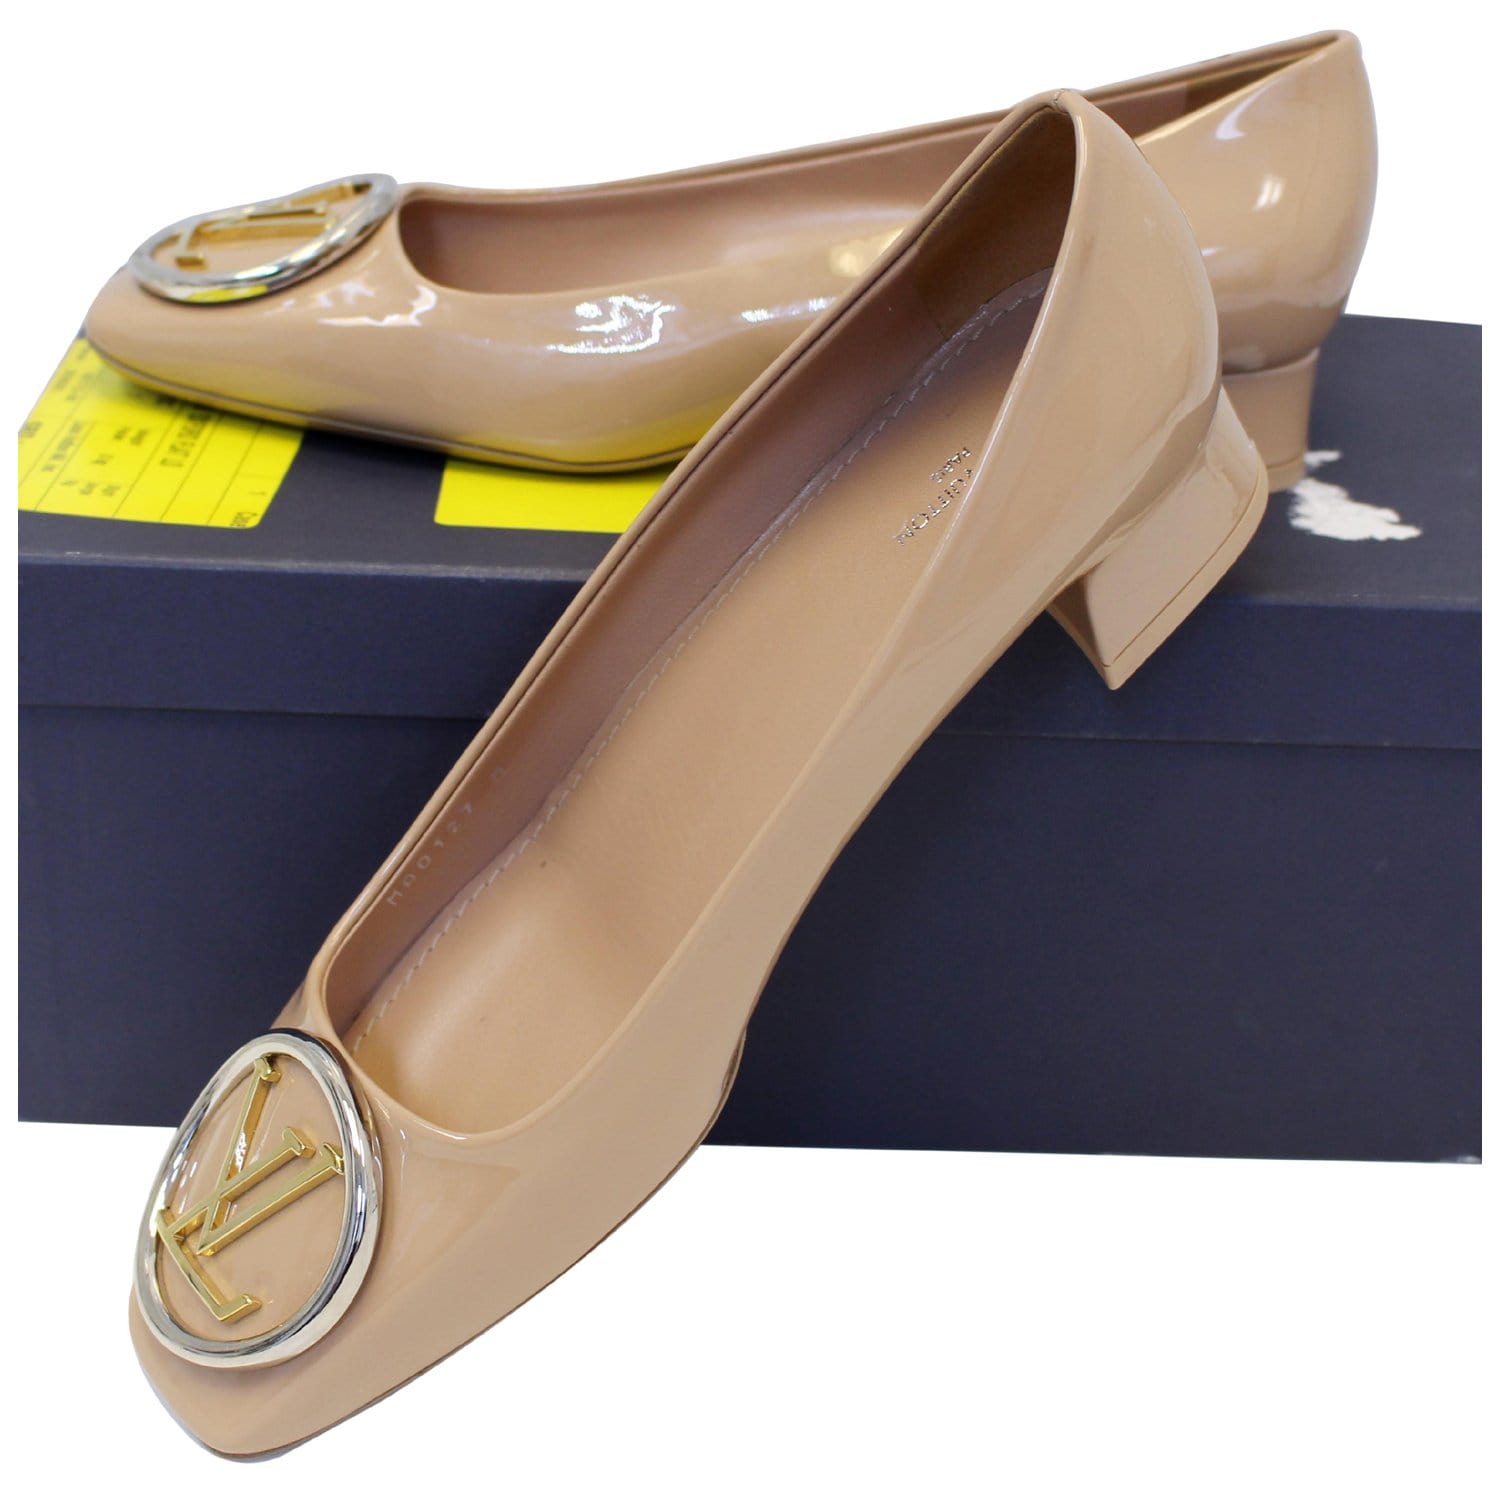 Madeleine patent leather heels Louis Vuitton Black size 40 EU in